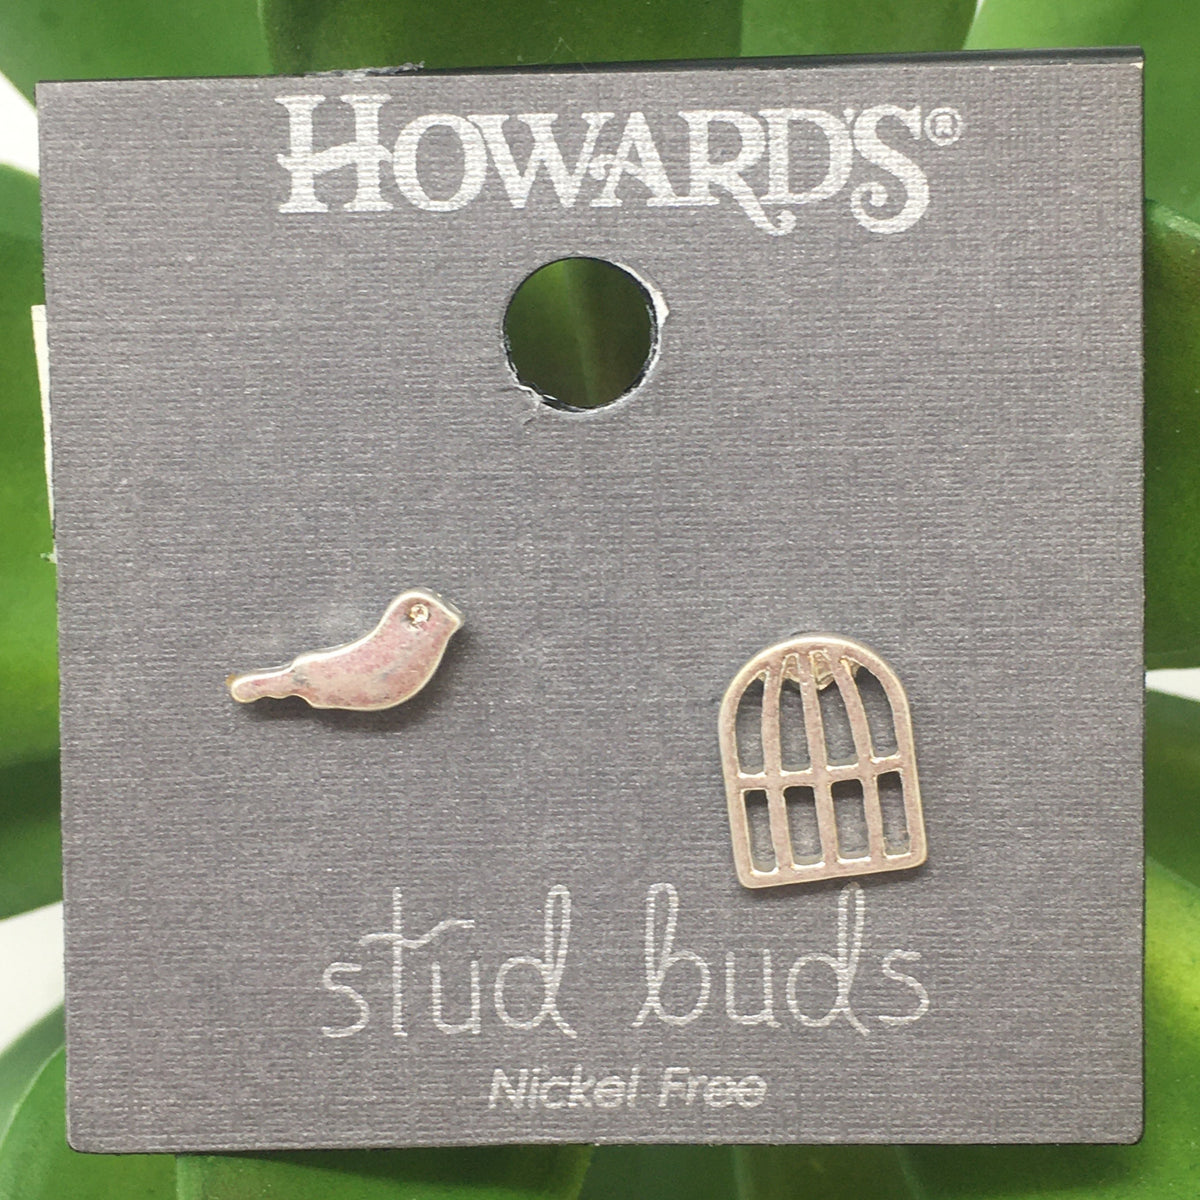 Bird Cage Stud Buds Earrings